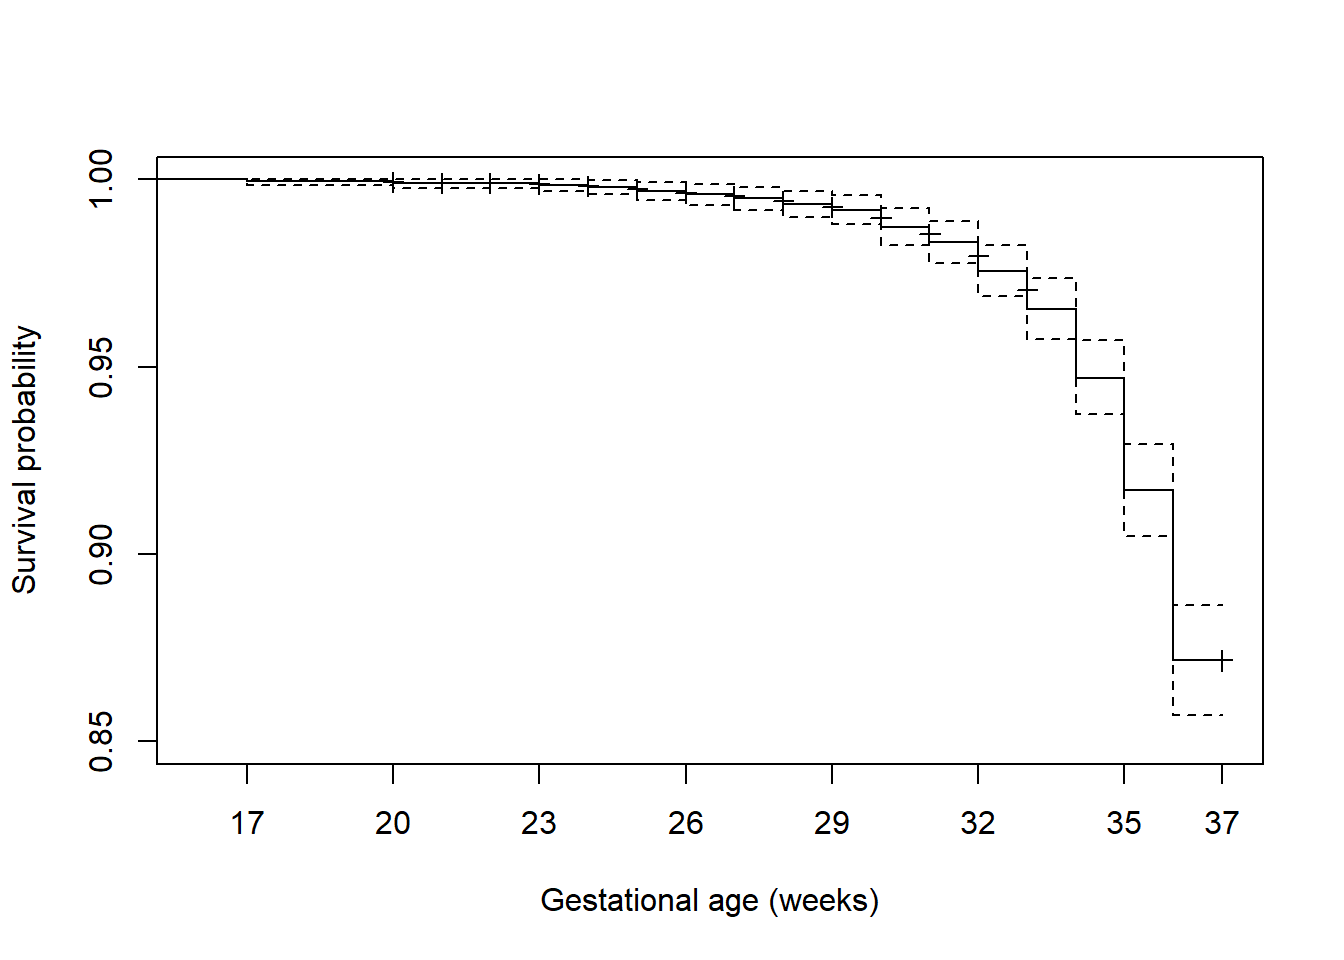 Customized survival function plot